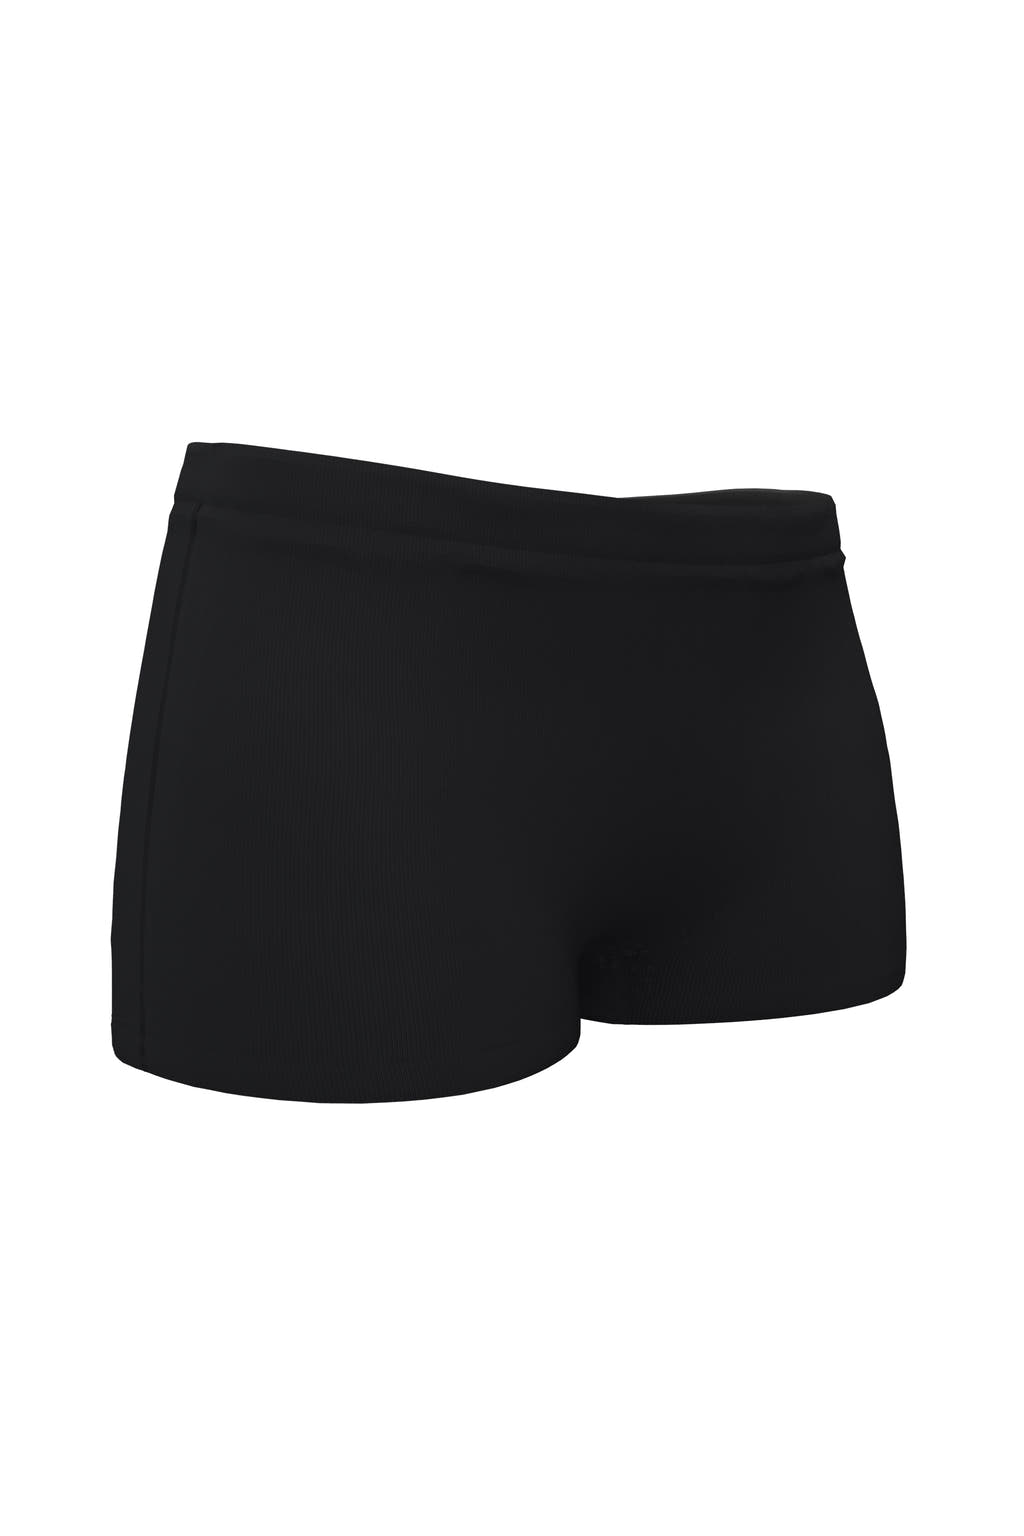 black solid boyshort underwear for women